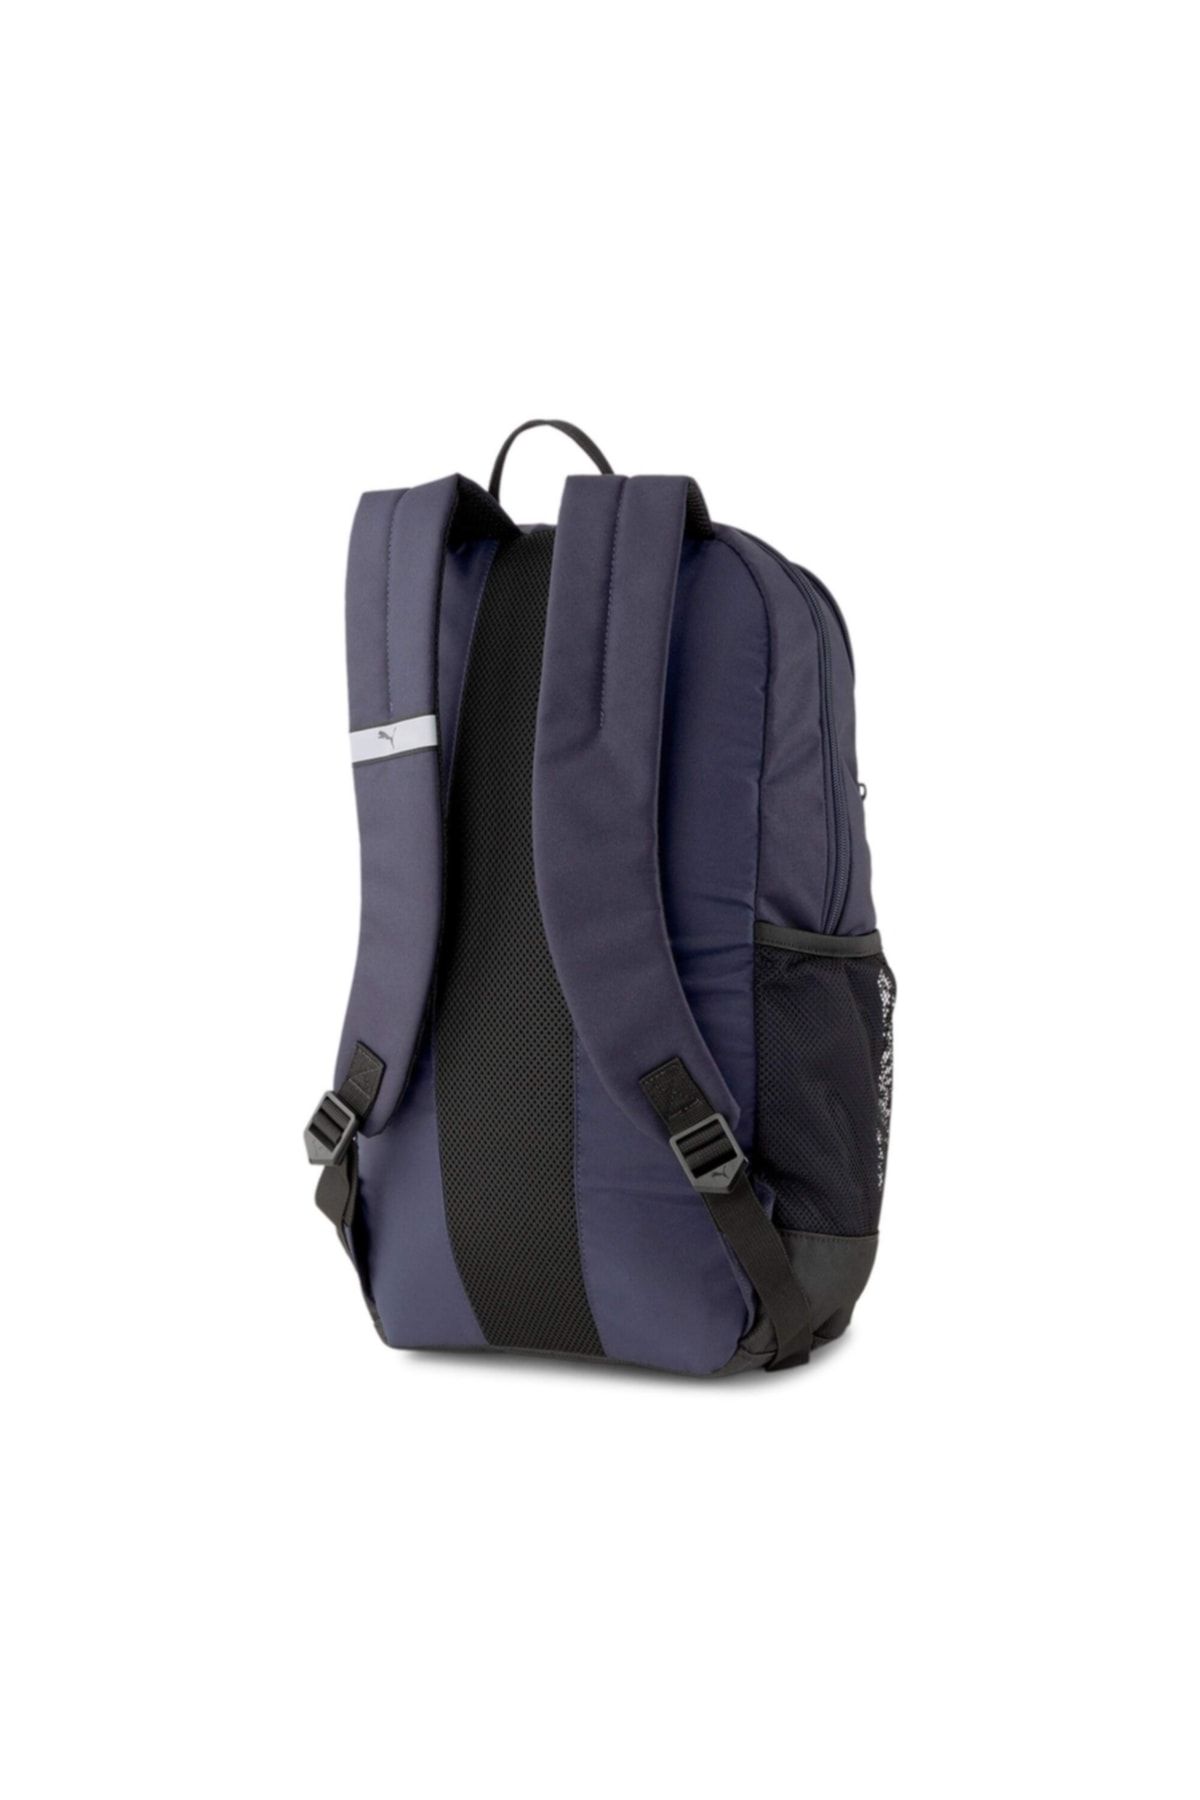 Puma Unisex Sırt Çantası - Deck Backpack Peacoat - 07690507